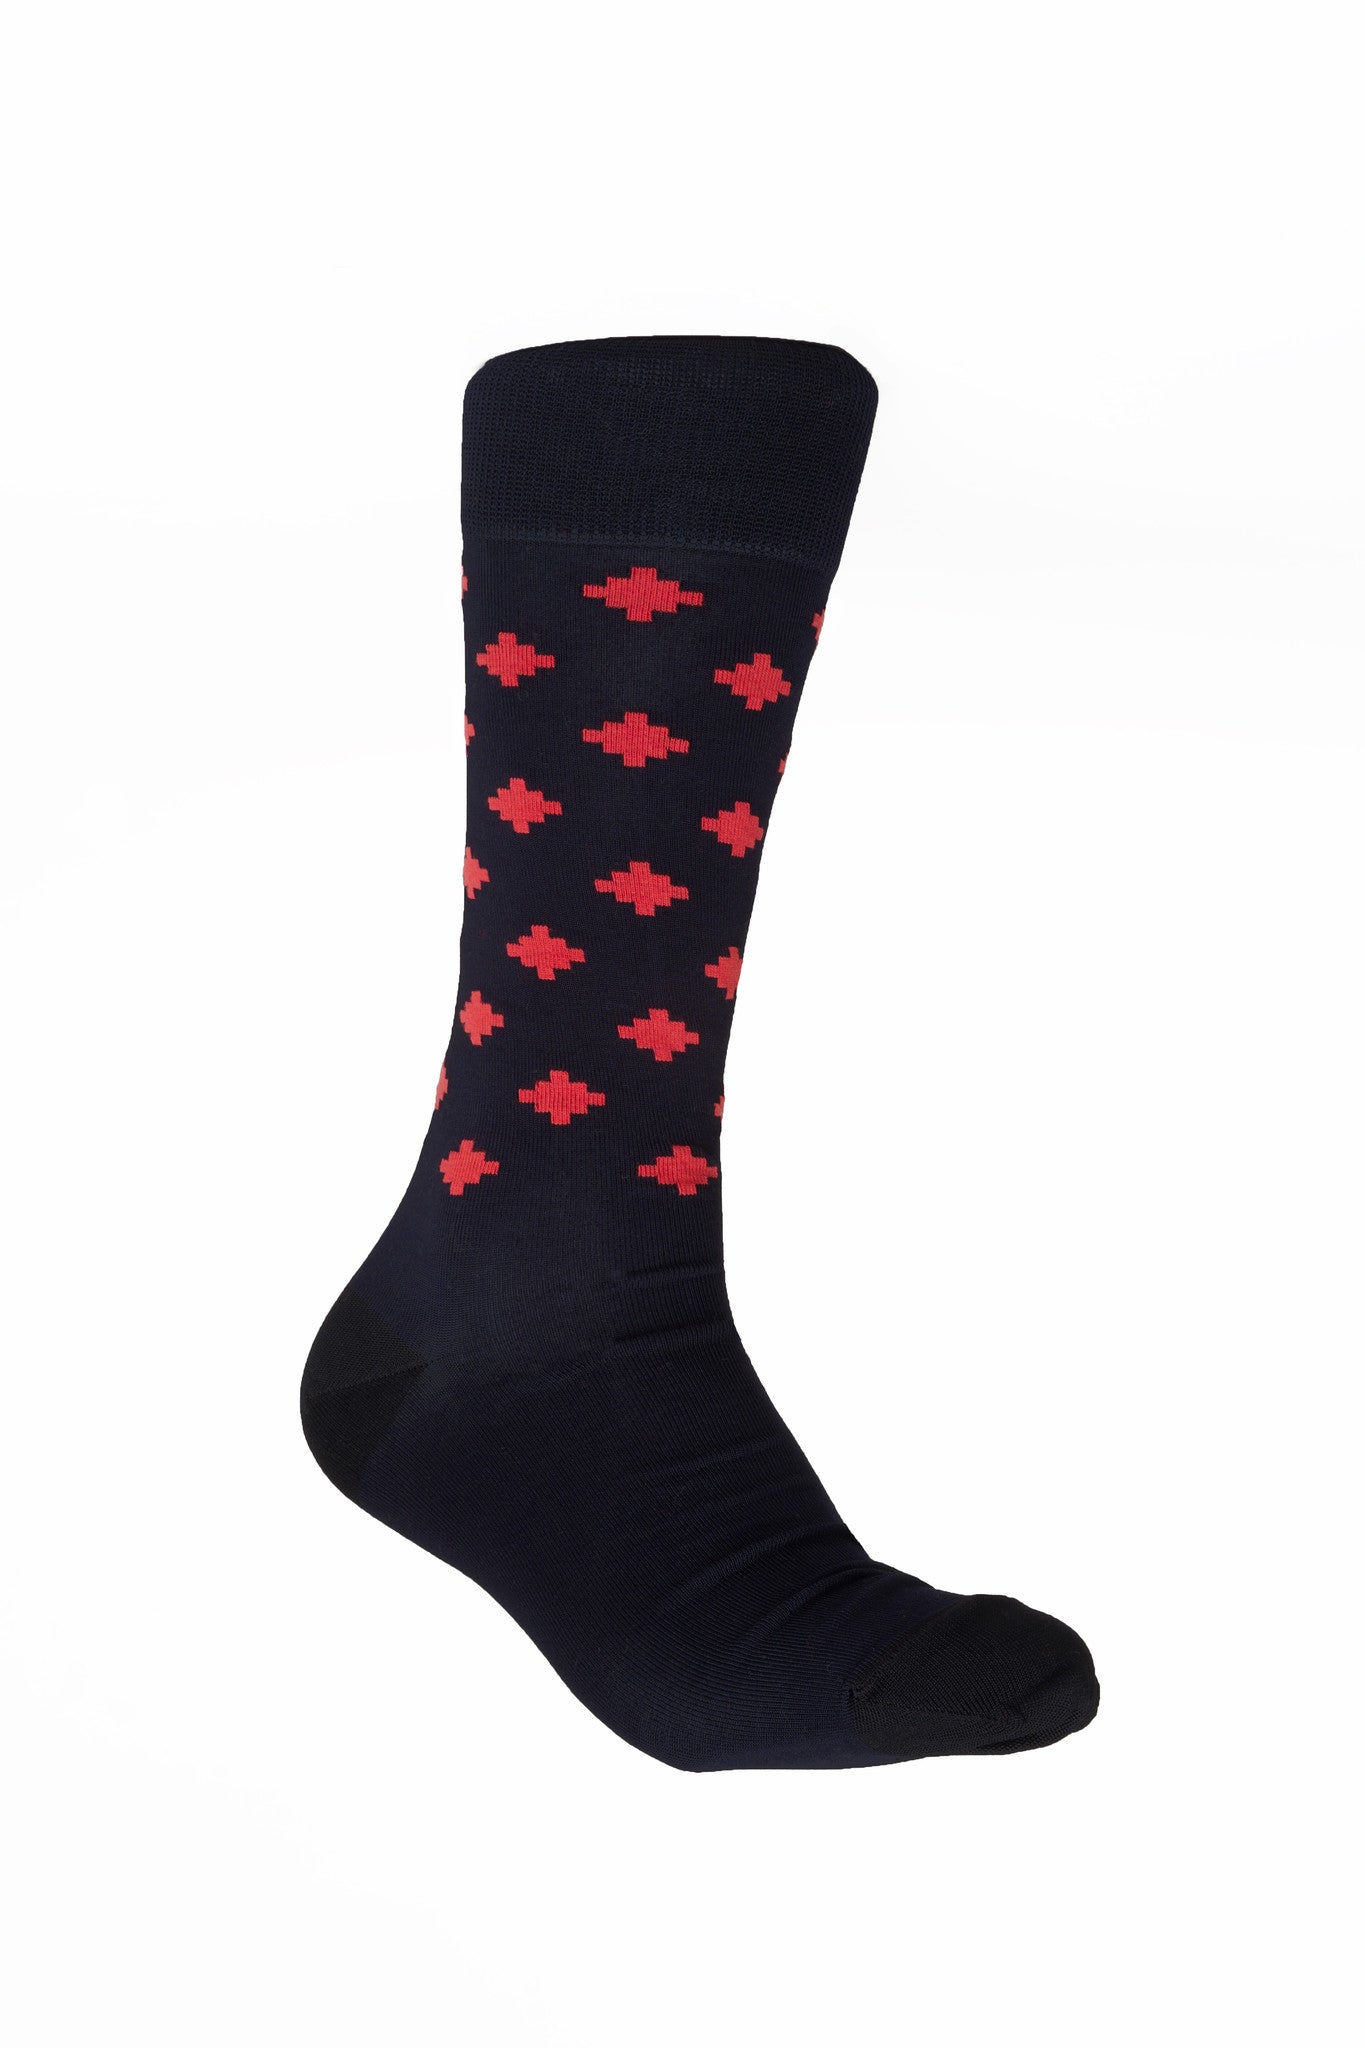 Giraffecool-Giraffe-Cool-Brand-Black-Red-Pixelated-Dots-Pixel-Mercerized-And-Brushed-Cotton-Fashion-Socks-Front